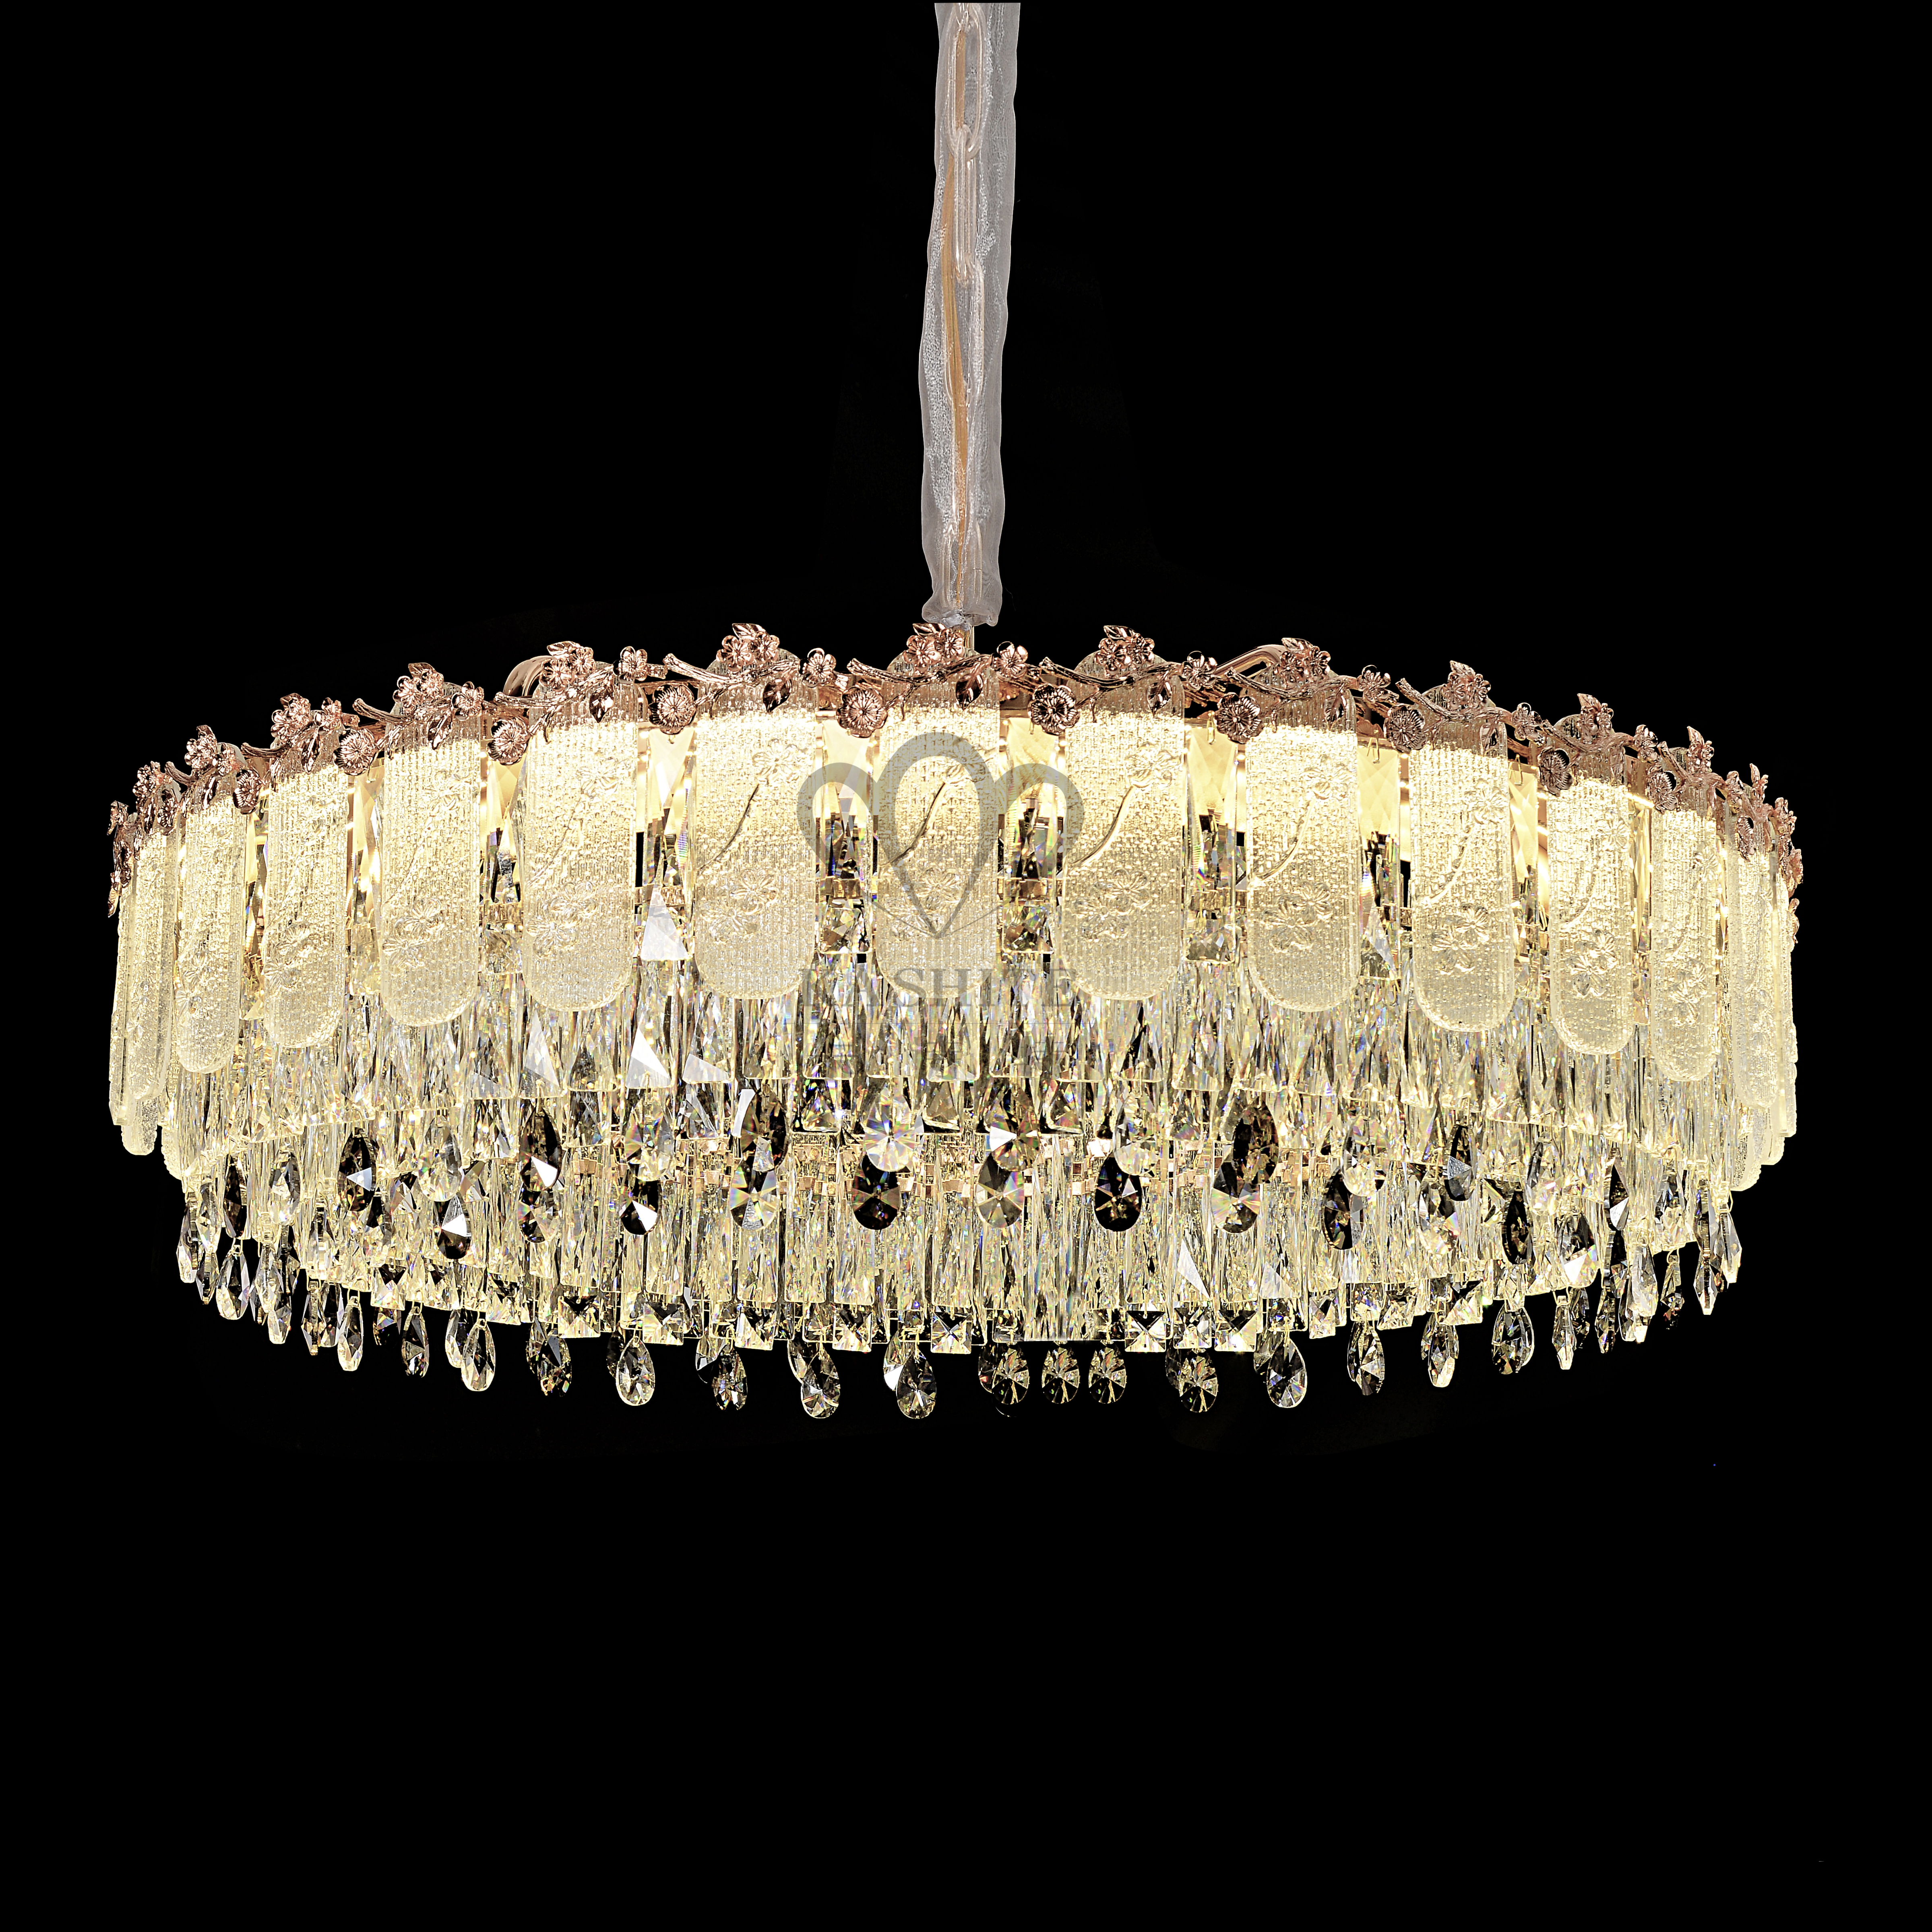 Irregular luxury atmosphere design sense crystal chandelier